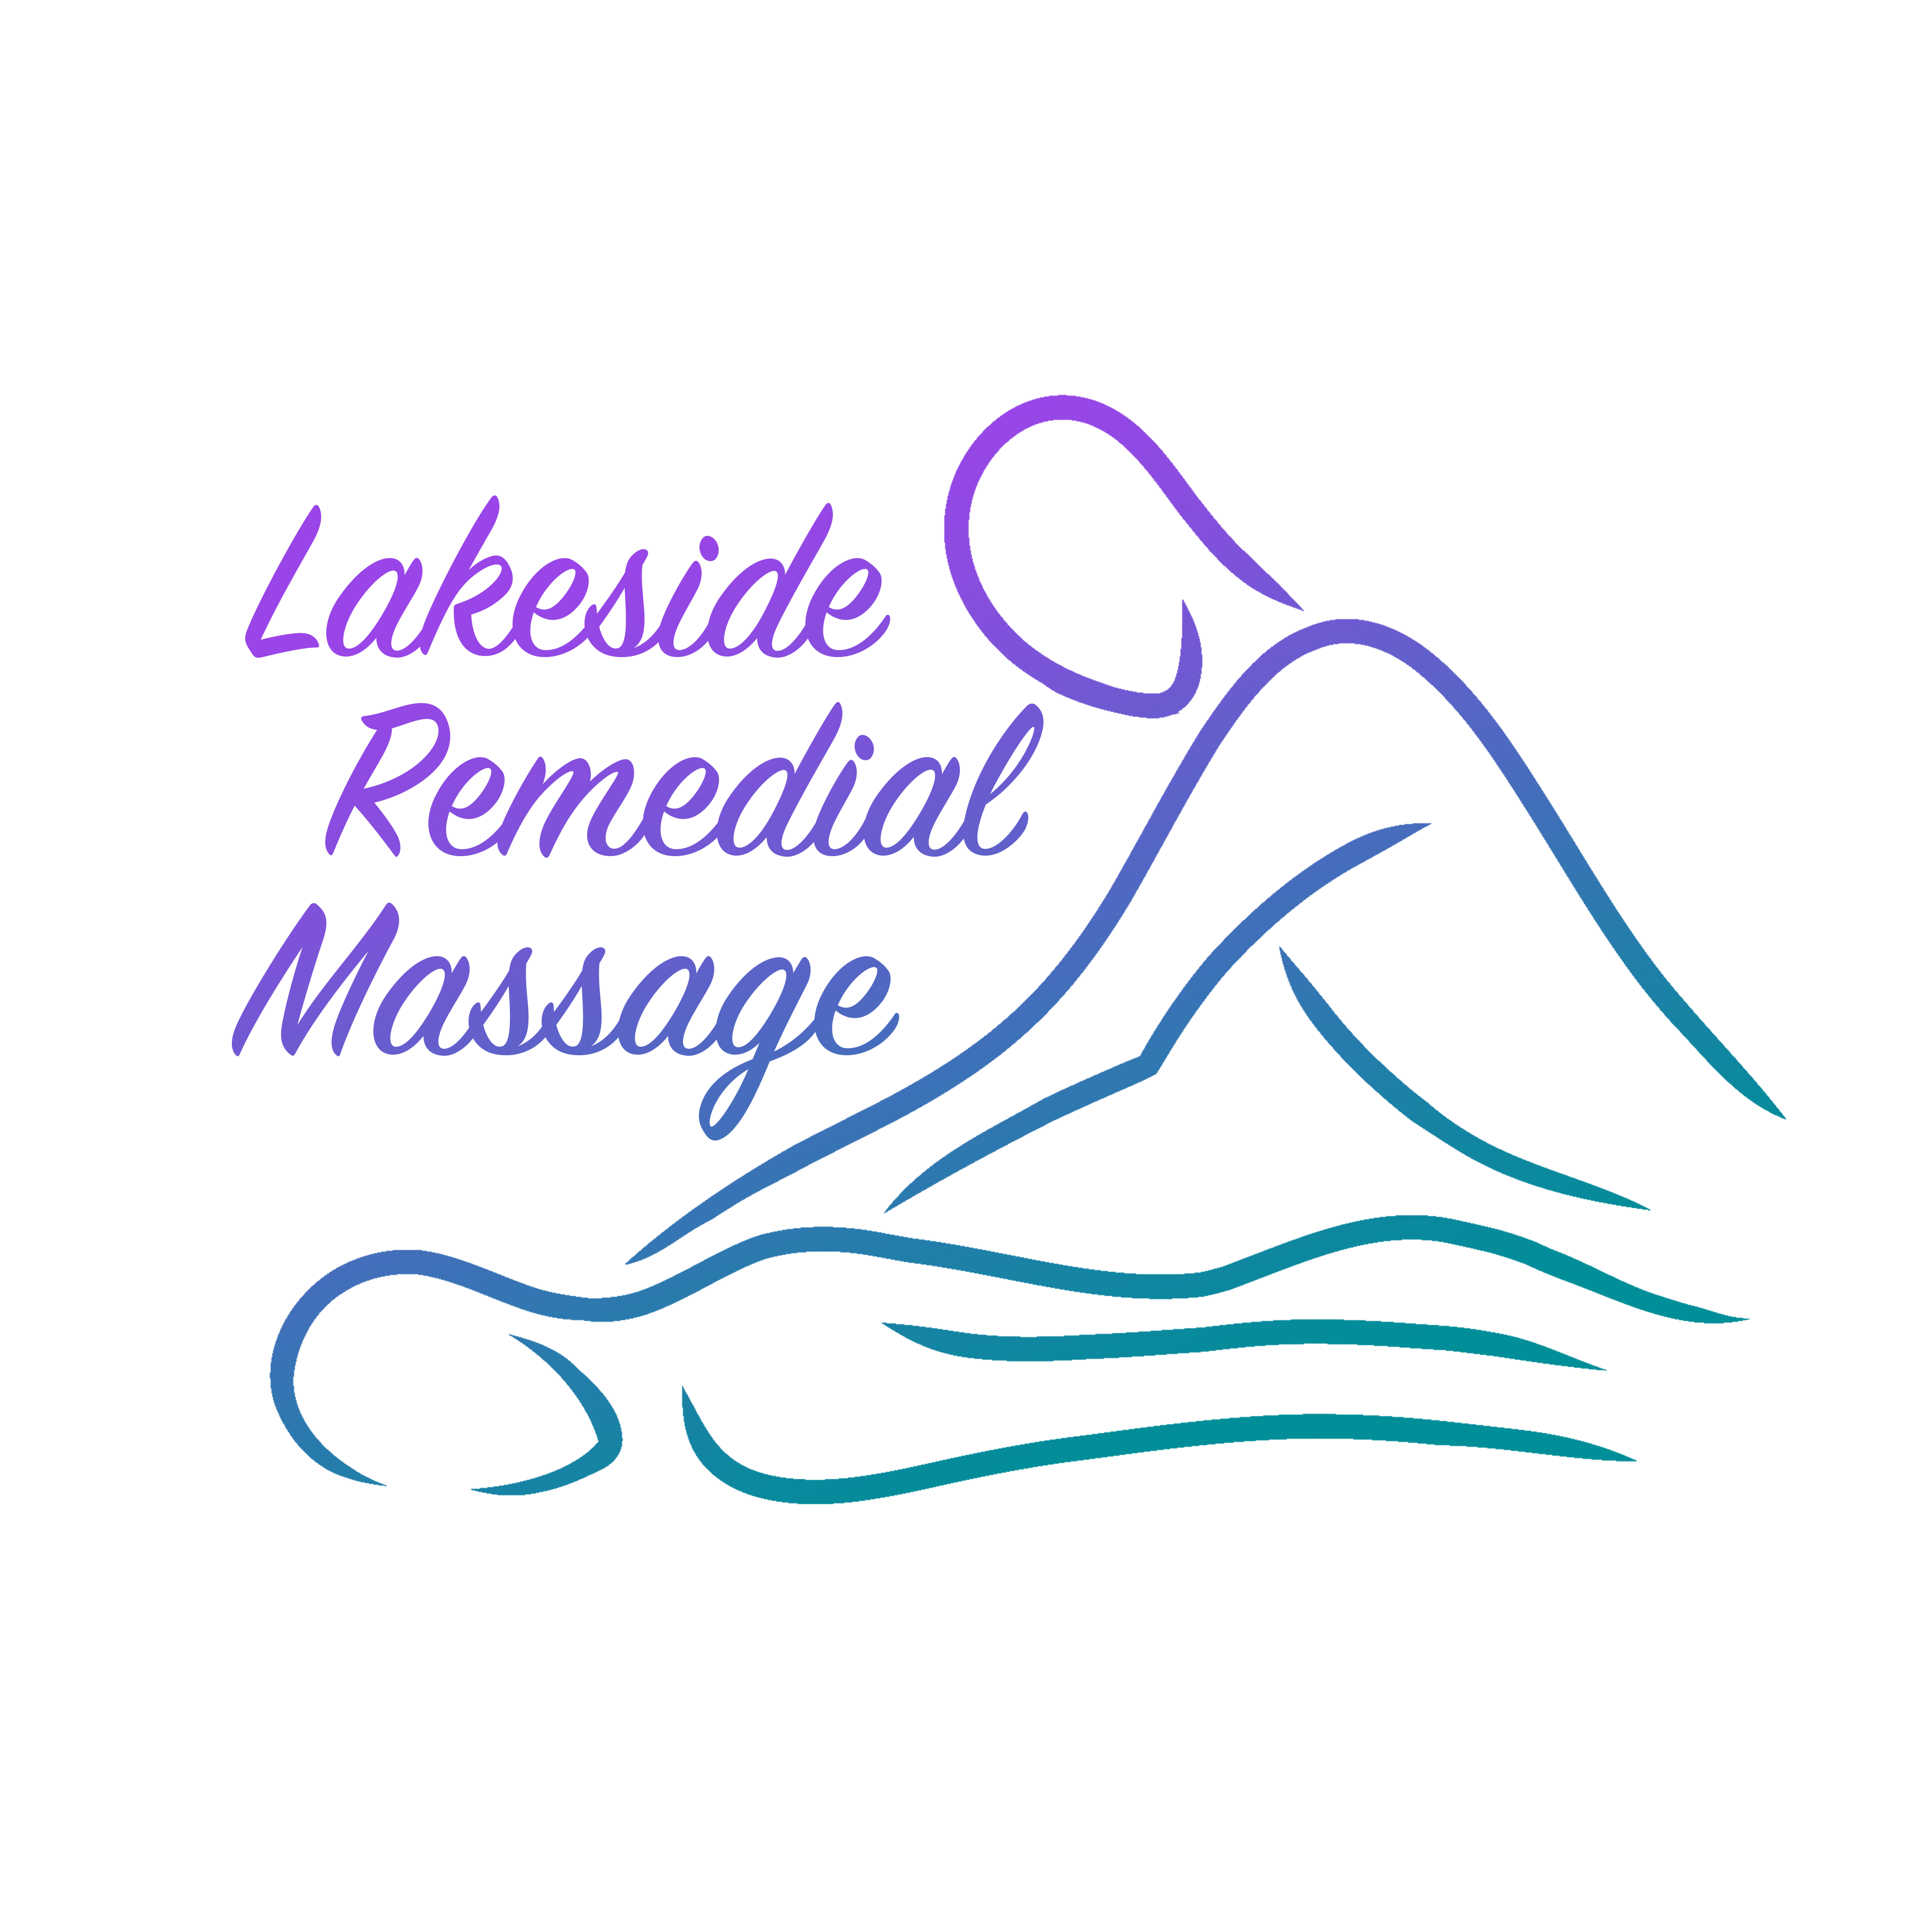 Logolrm low lakeside. Massage clipart remedial